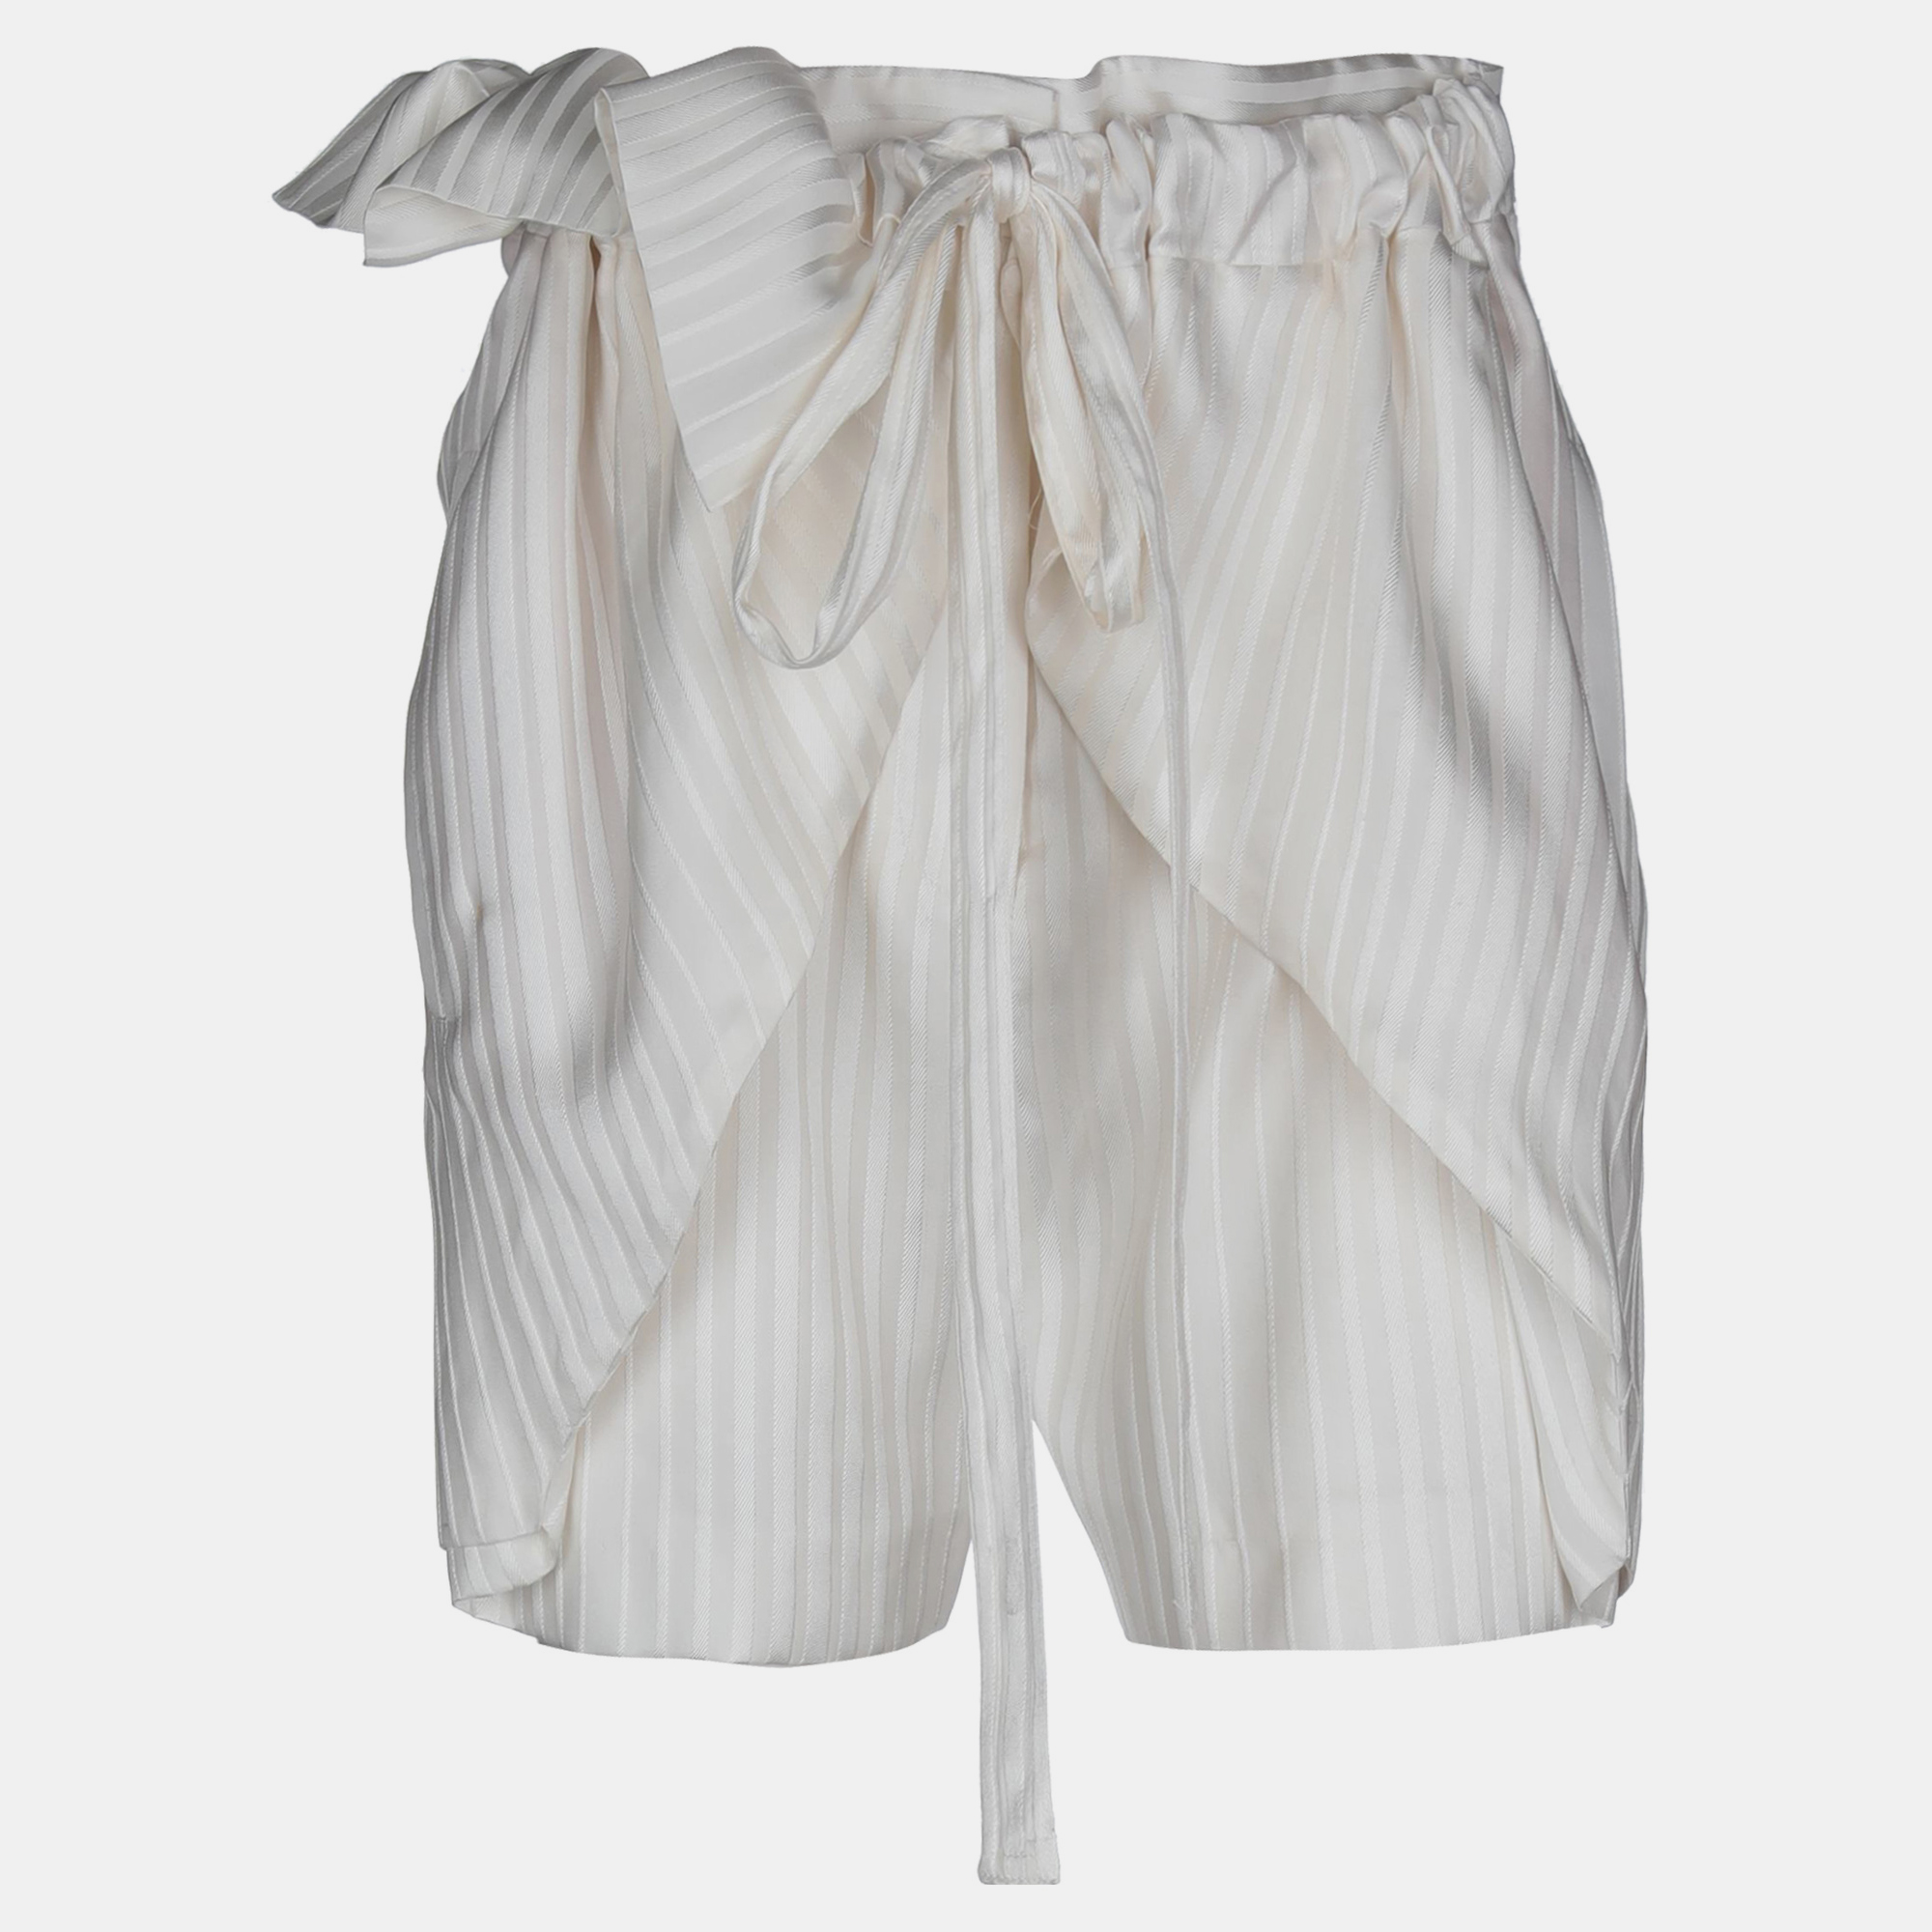 Stella mccartney silk shorts 38